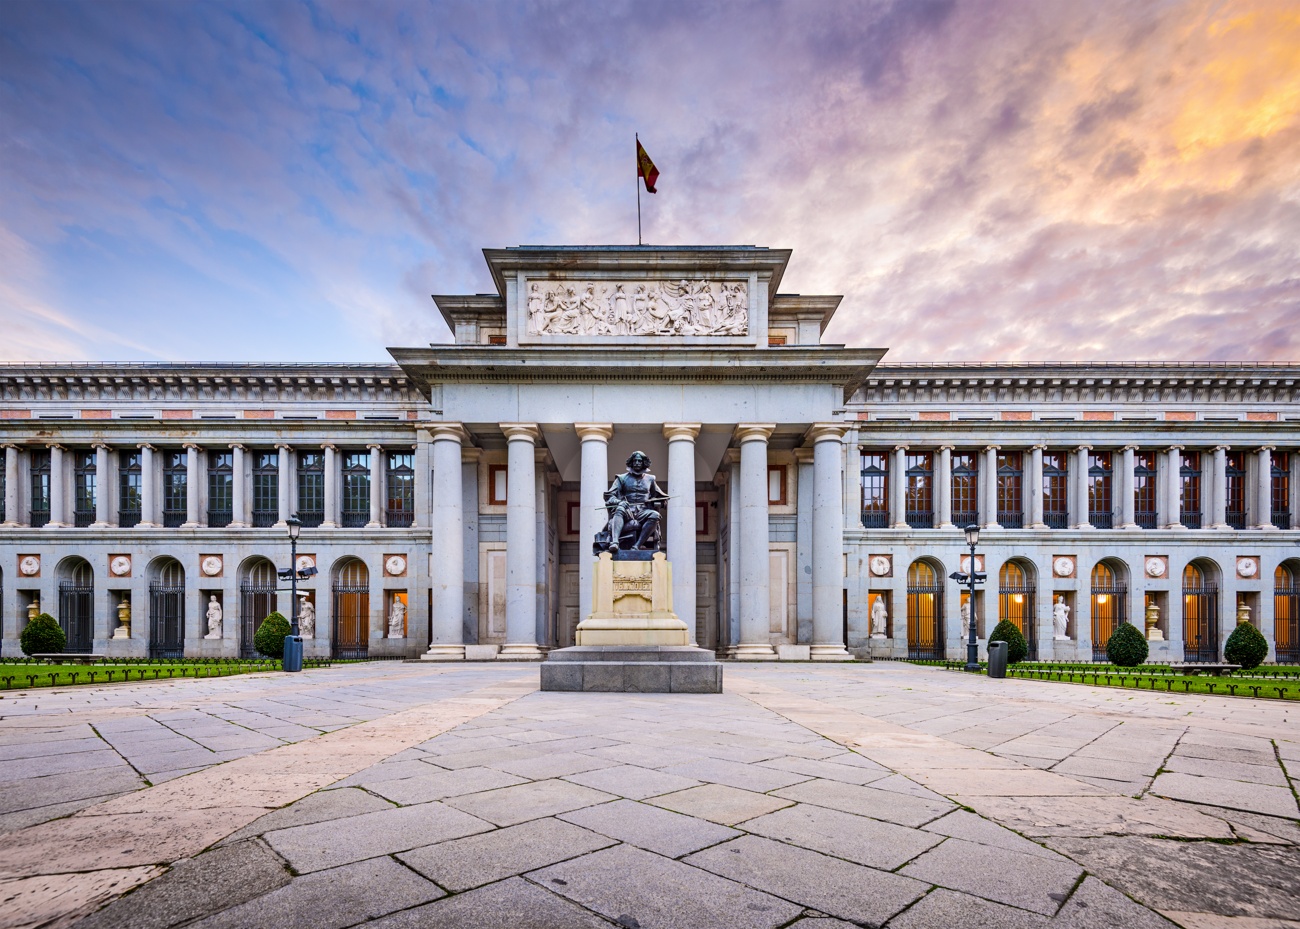 The Prado Museum has been able to modernize